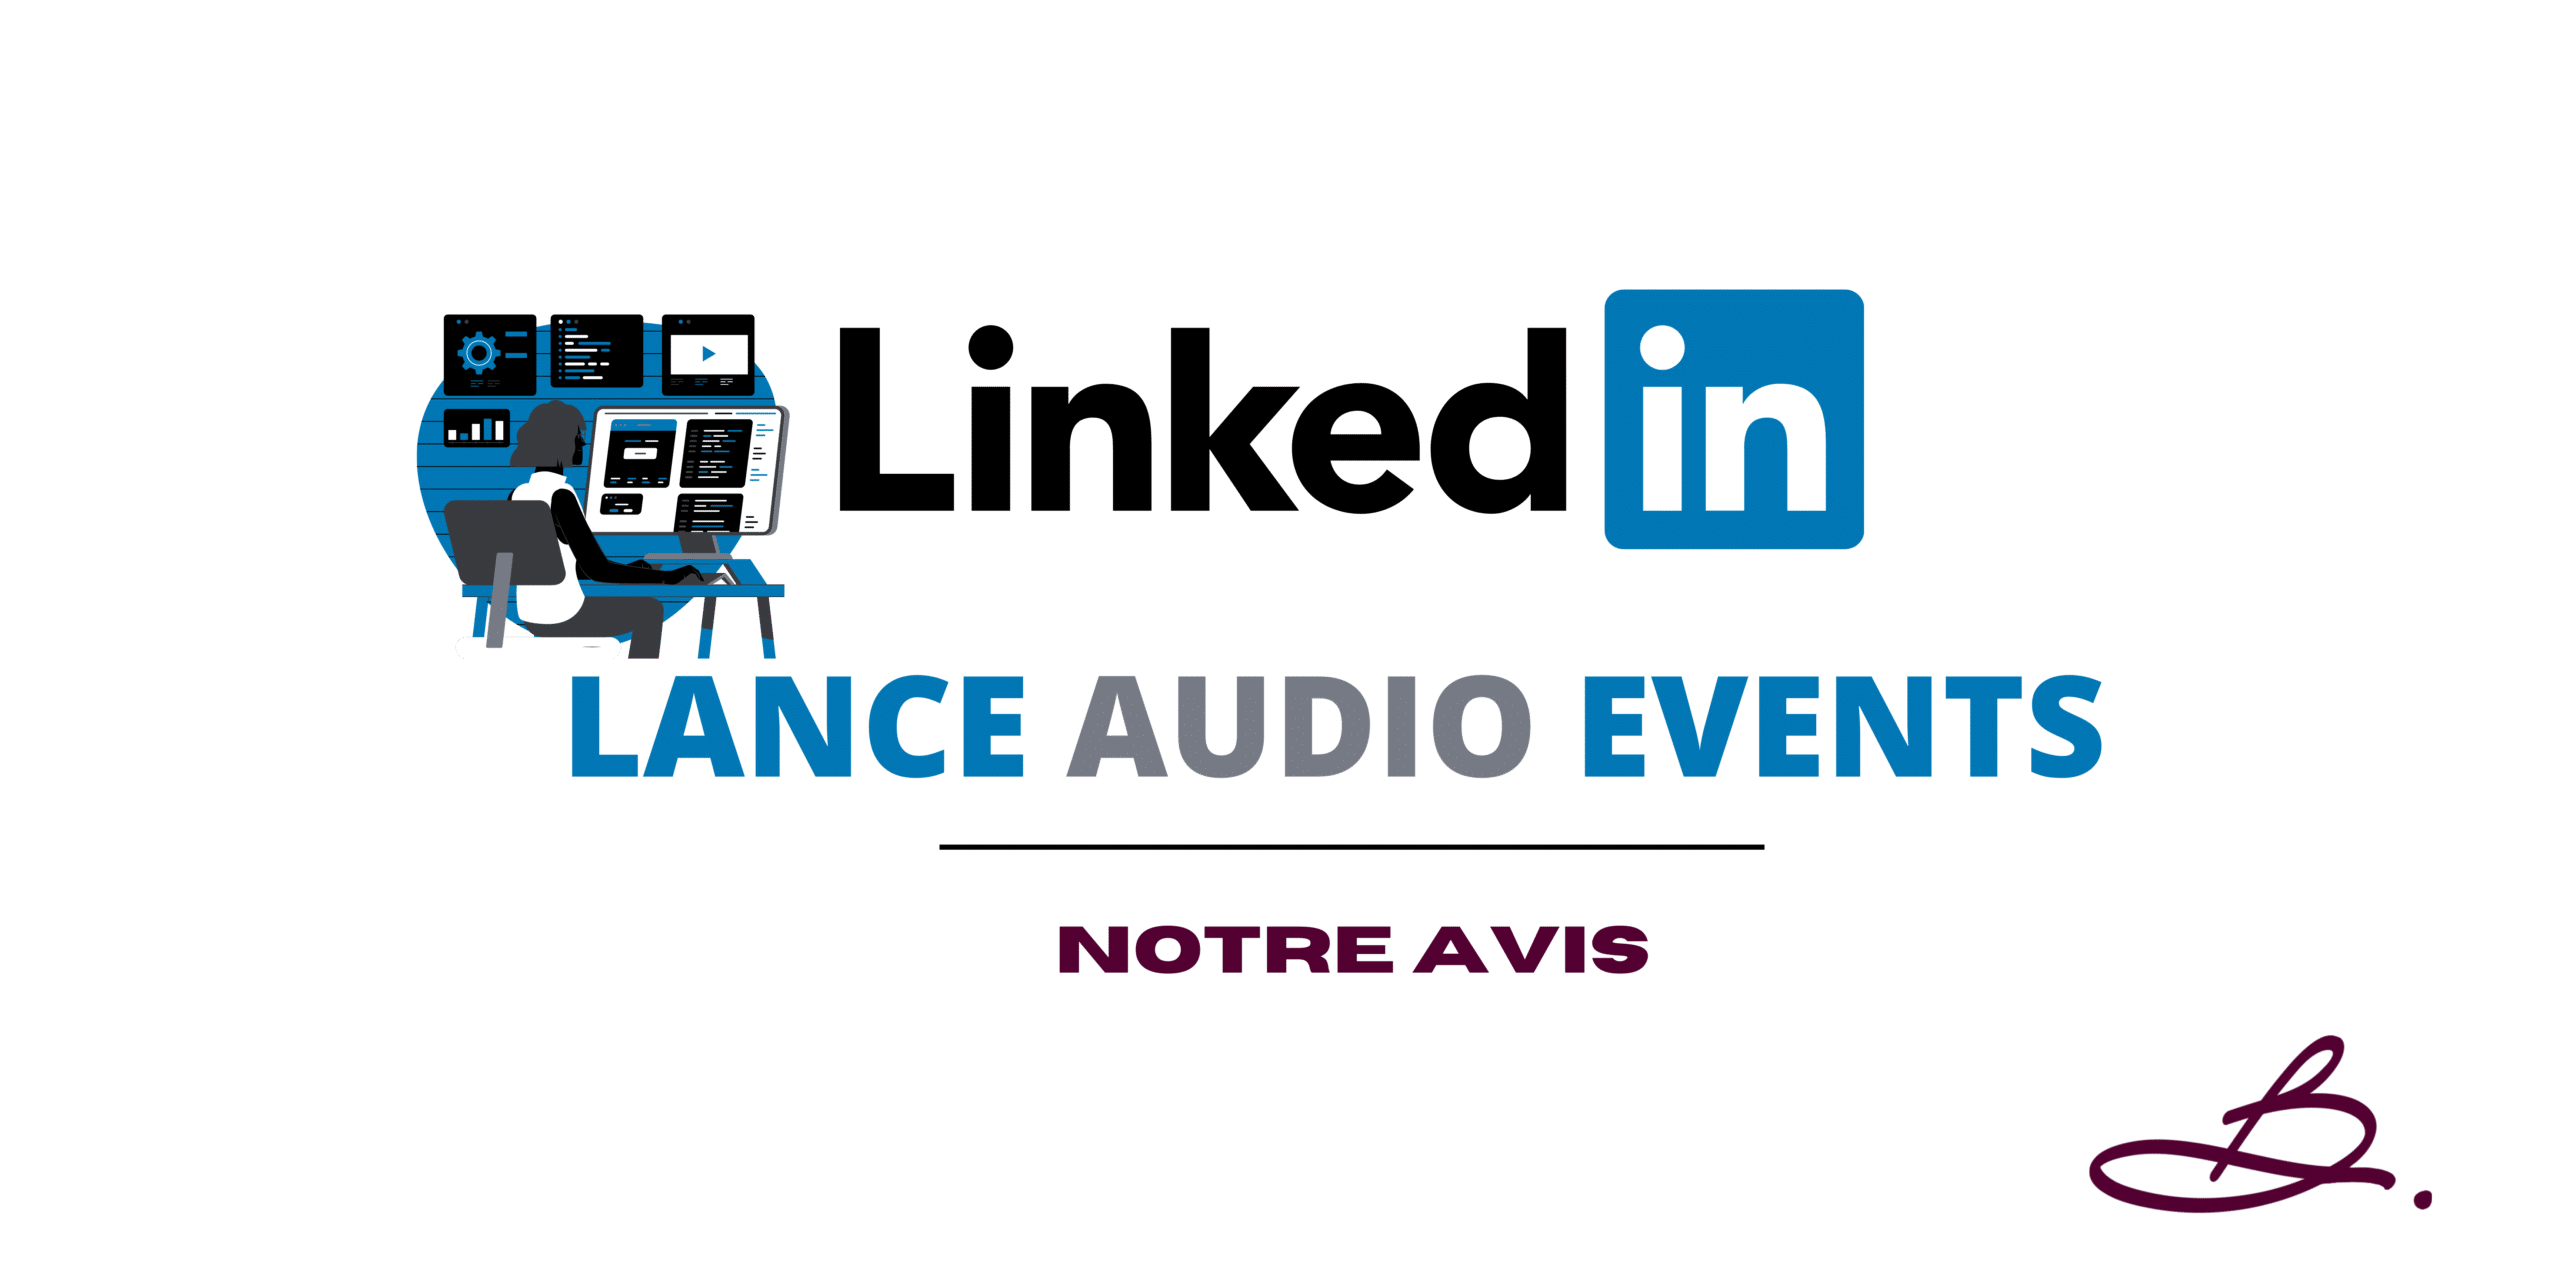 Lancement audio event Linkedin